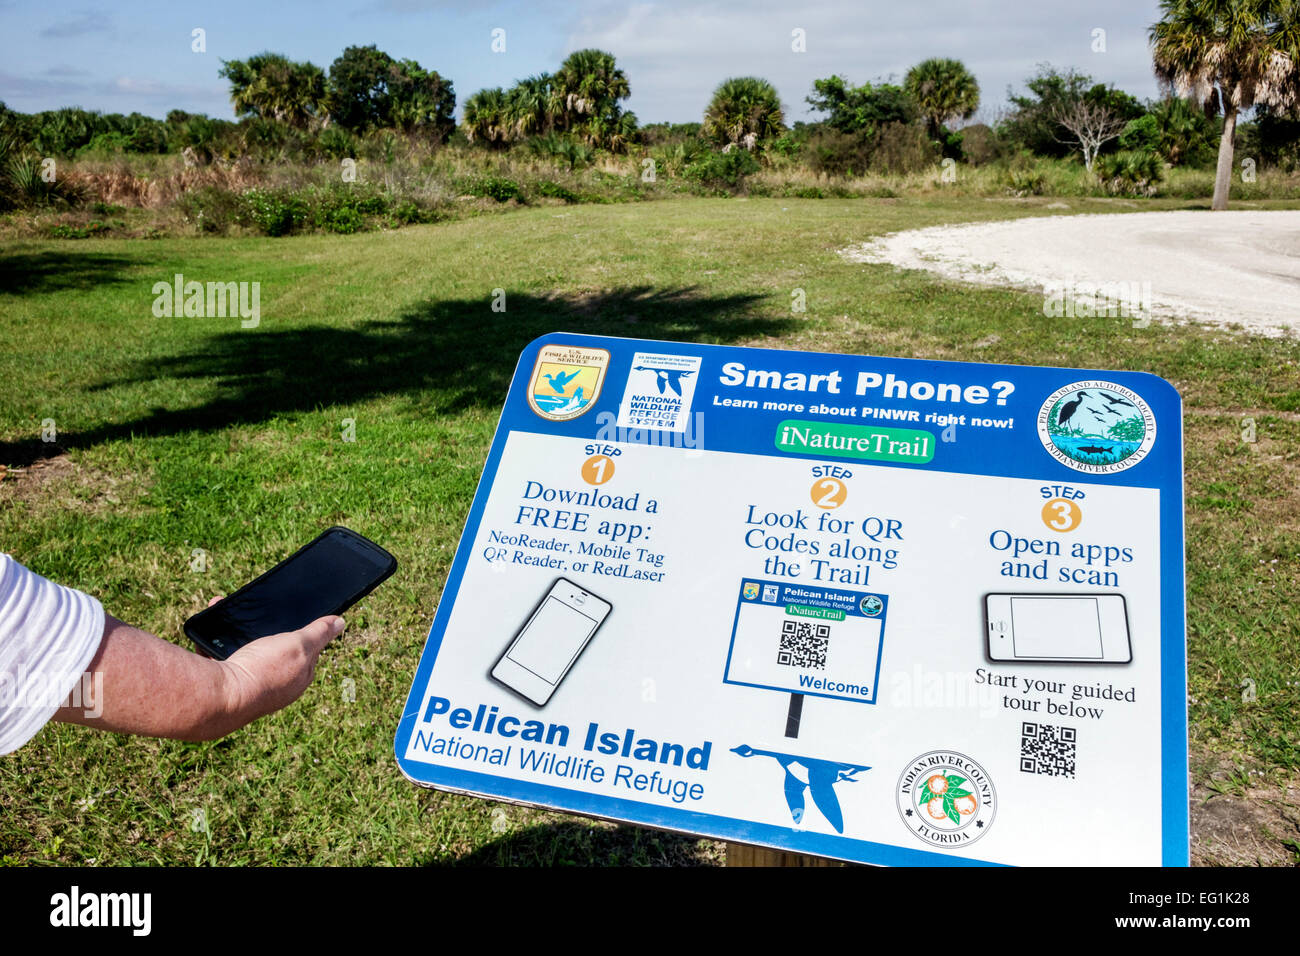 Sebastian Florida,North Hutchinson Orchid Island,Pelican Island National Wildlife Refuge,smartphone smartphones mobile cell smart phone phones texting Stock Photo